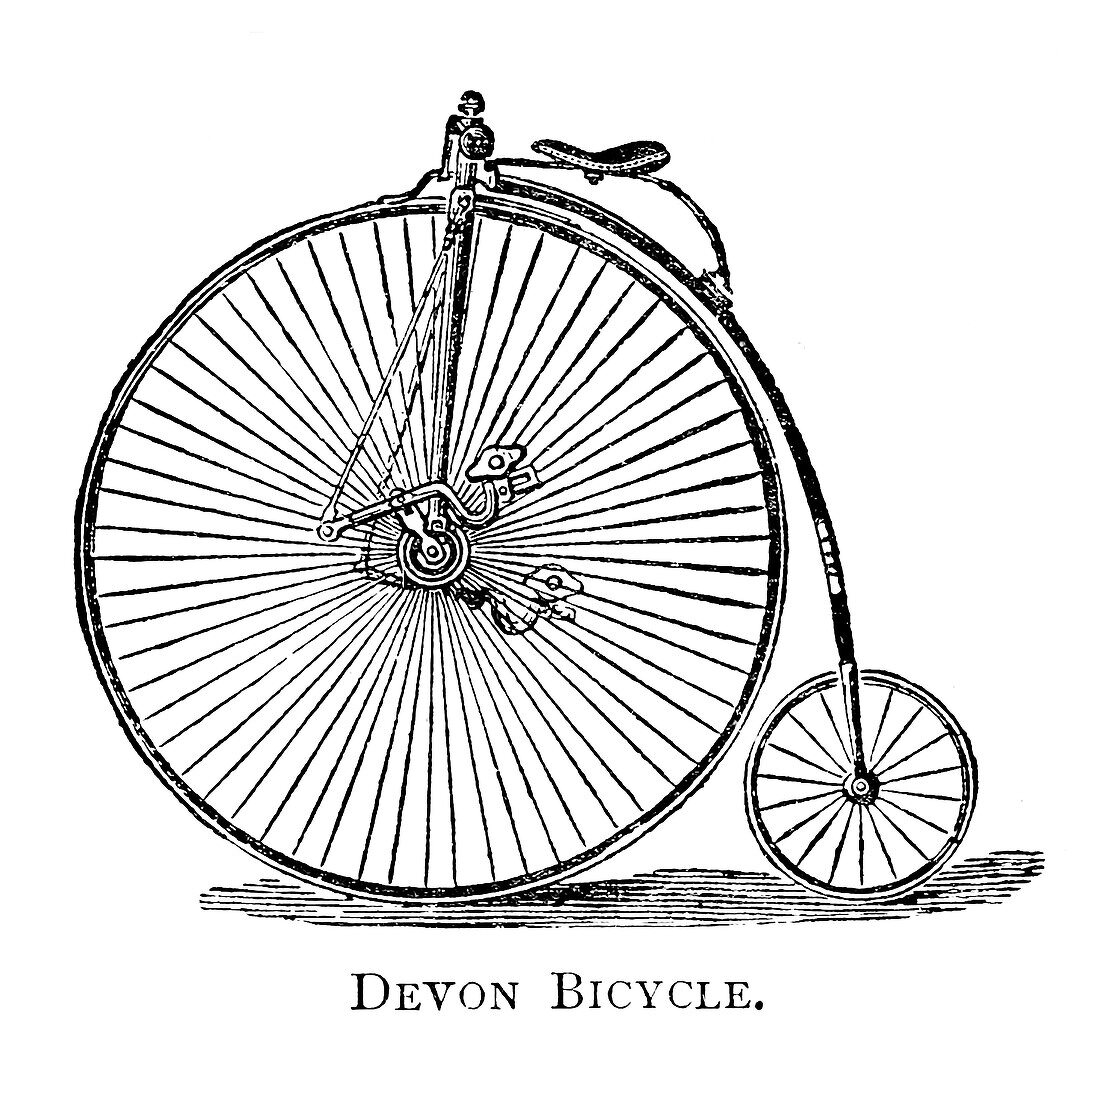 Devon high wheel bicycle, 19th century illustration